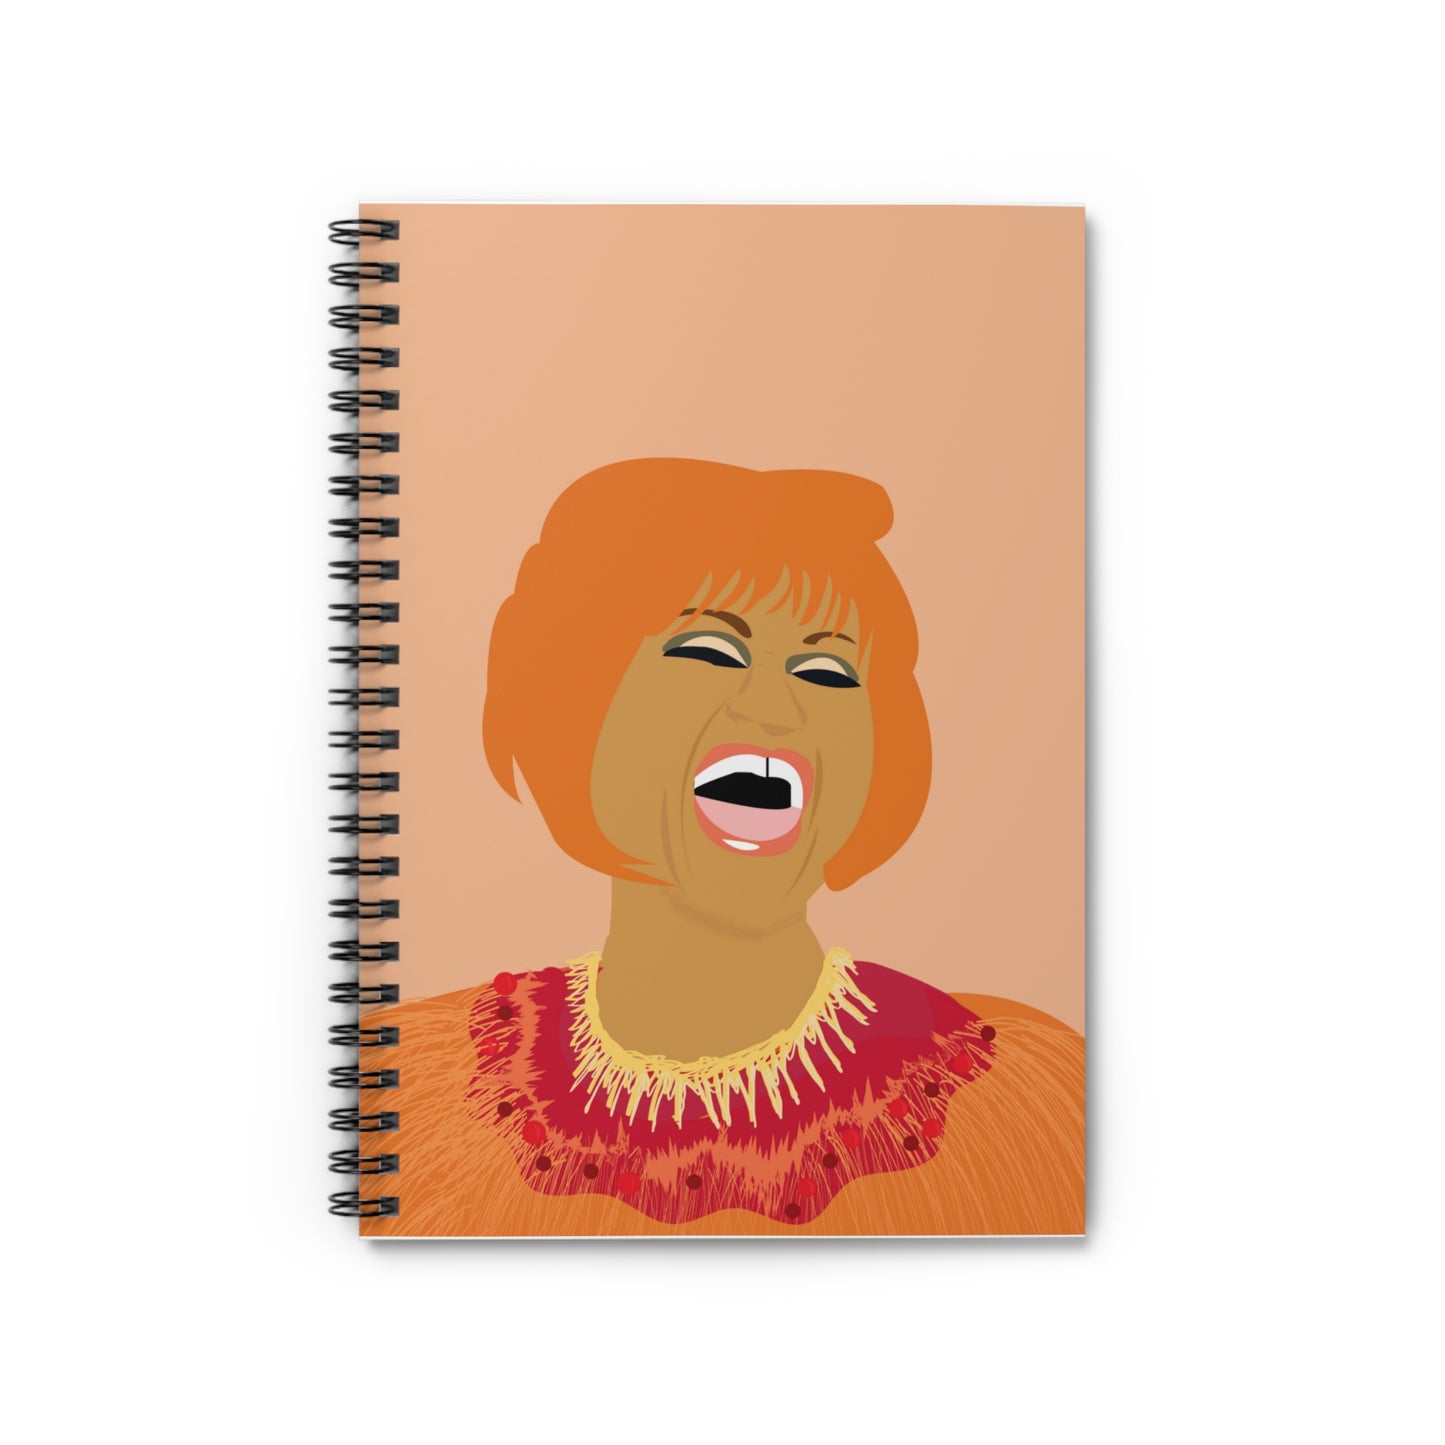 Celia Cruz Spiral Notebook - Ruled Line